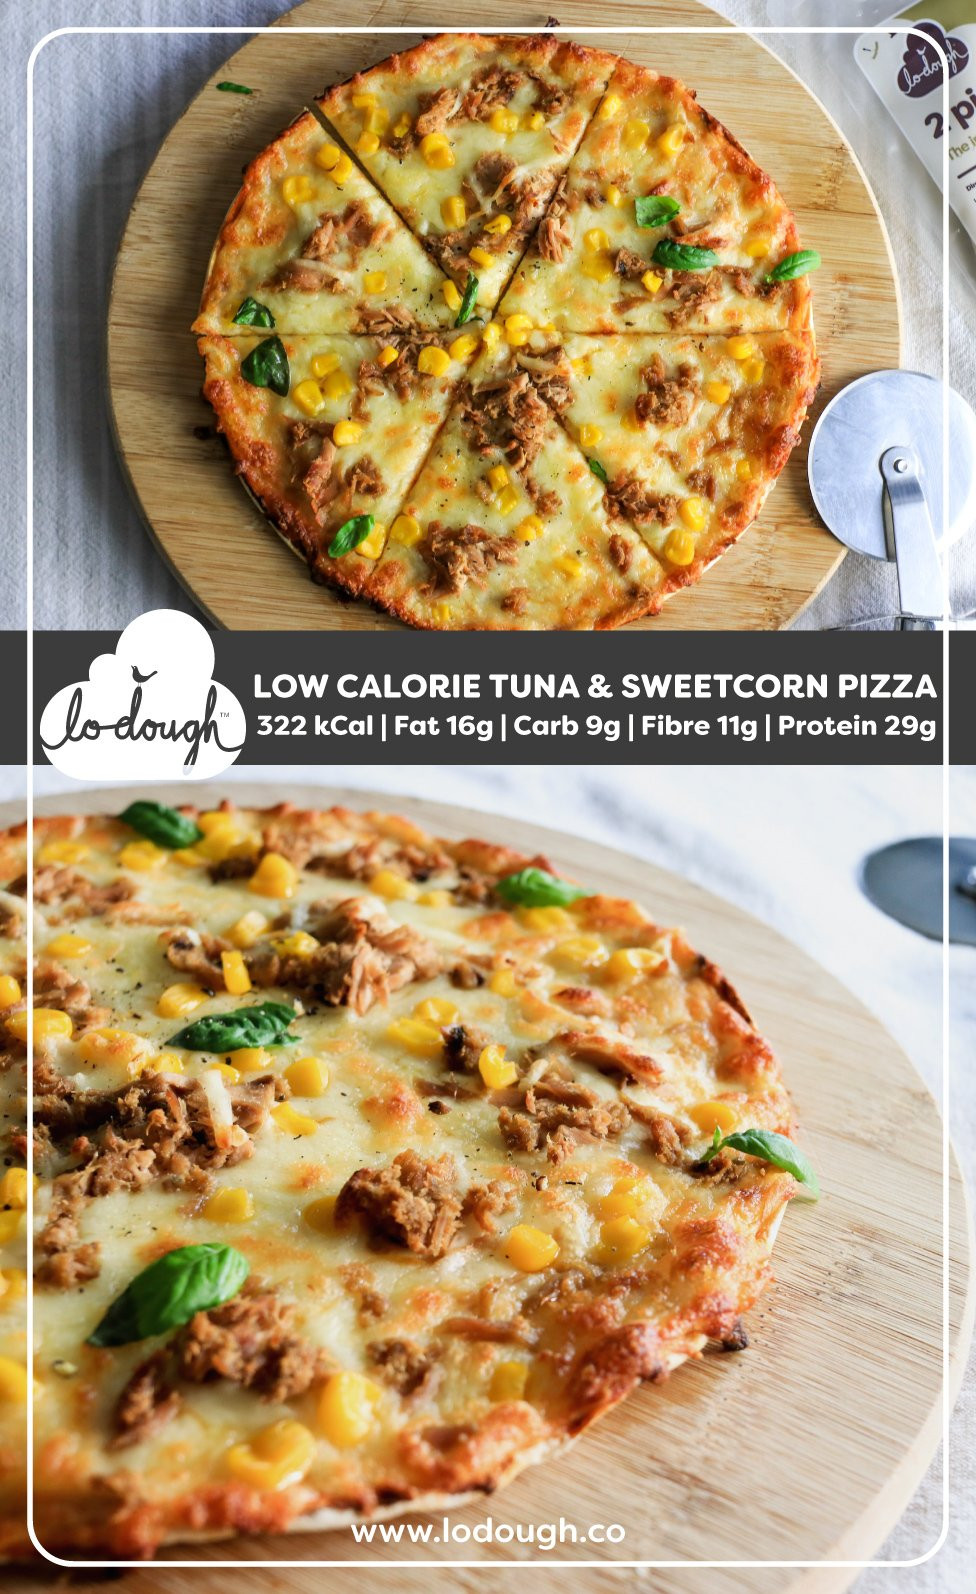 Low Calorie Pizza Dough Recipe
 Low Calorie Tuna & Sweetcorn Pizza